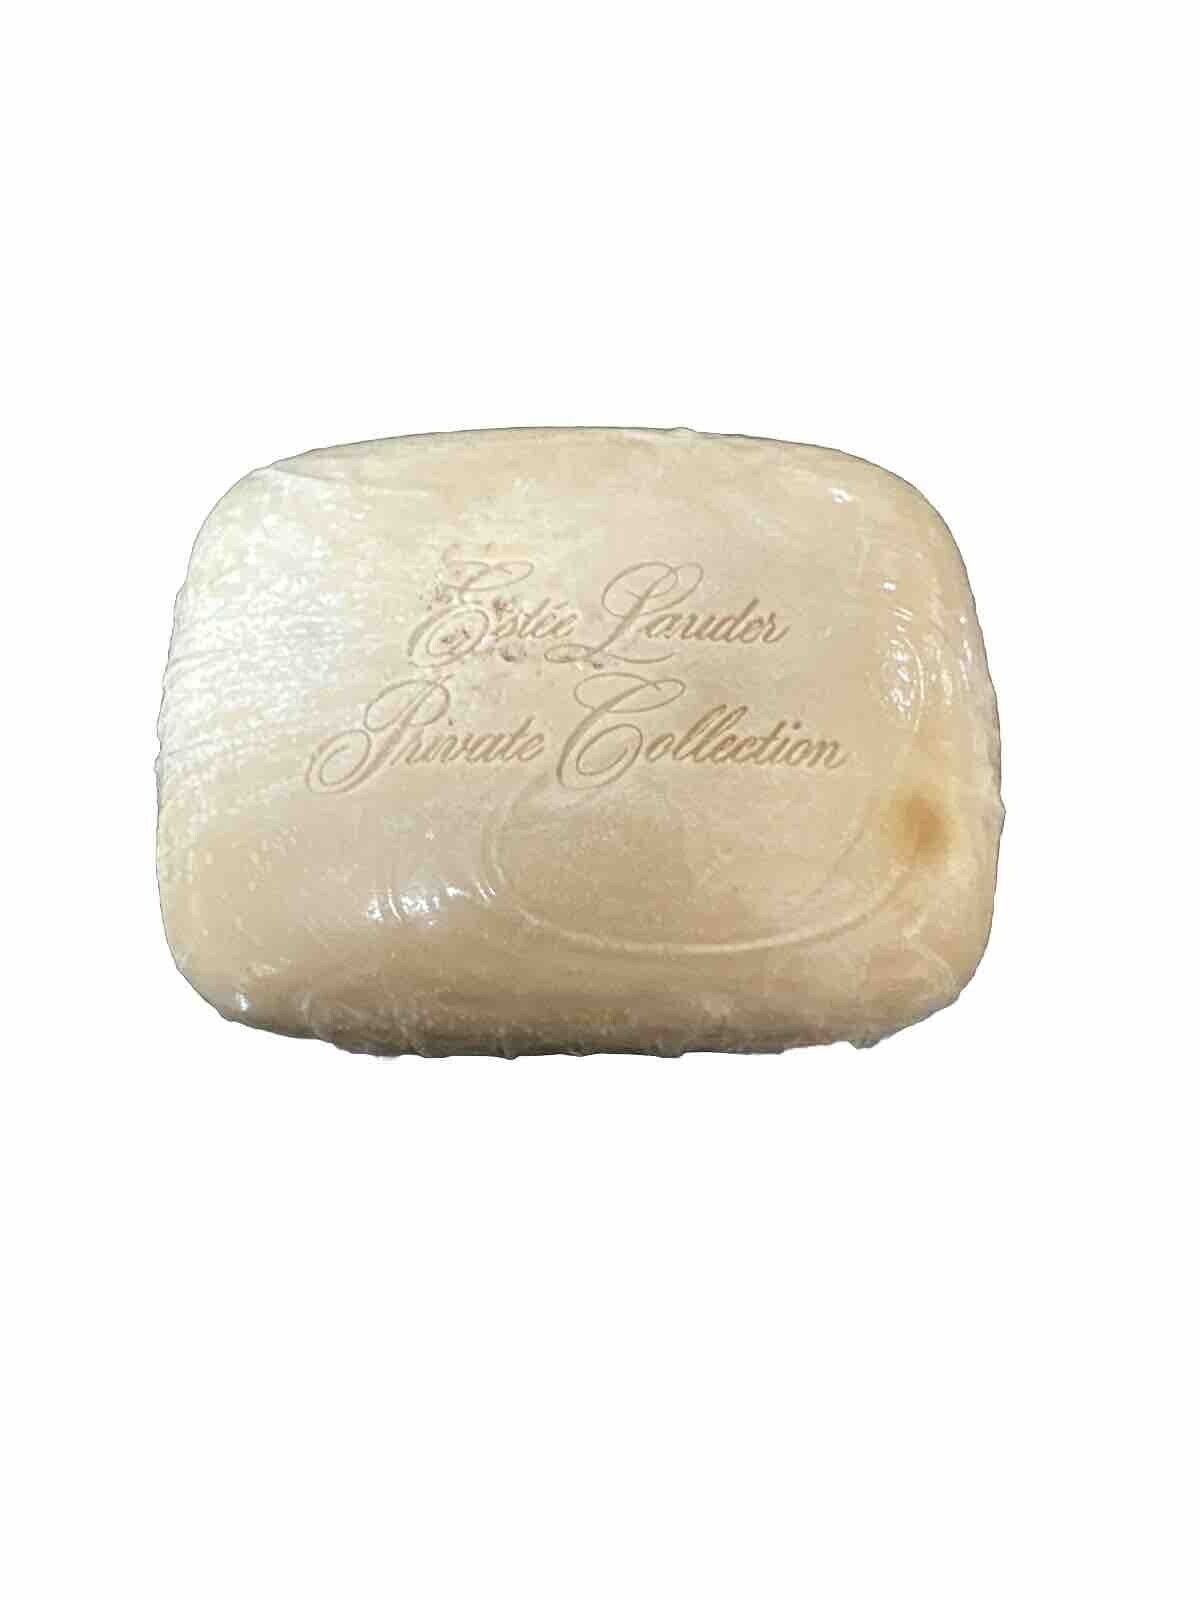 Vtg Estee Lauder Private Collection Soap NIP 4 Oz Each USA